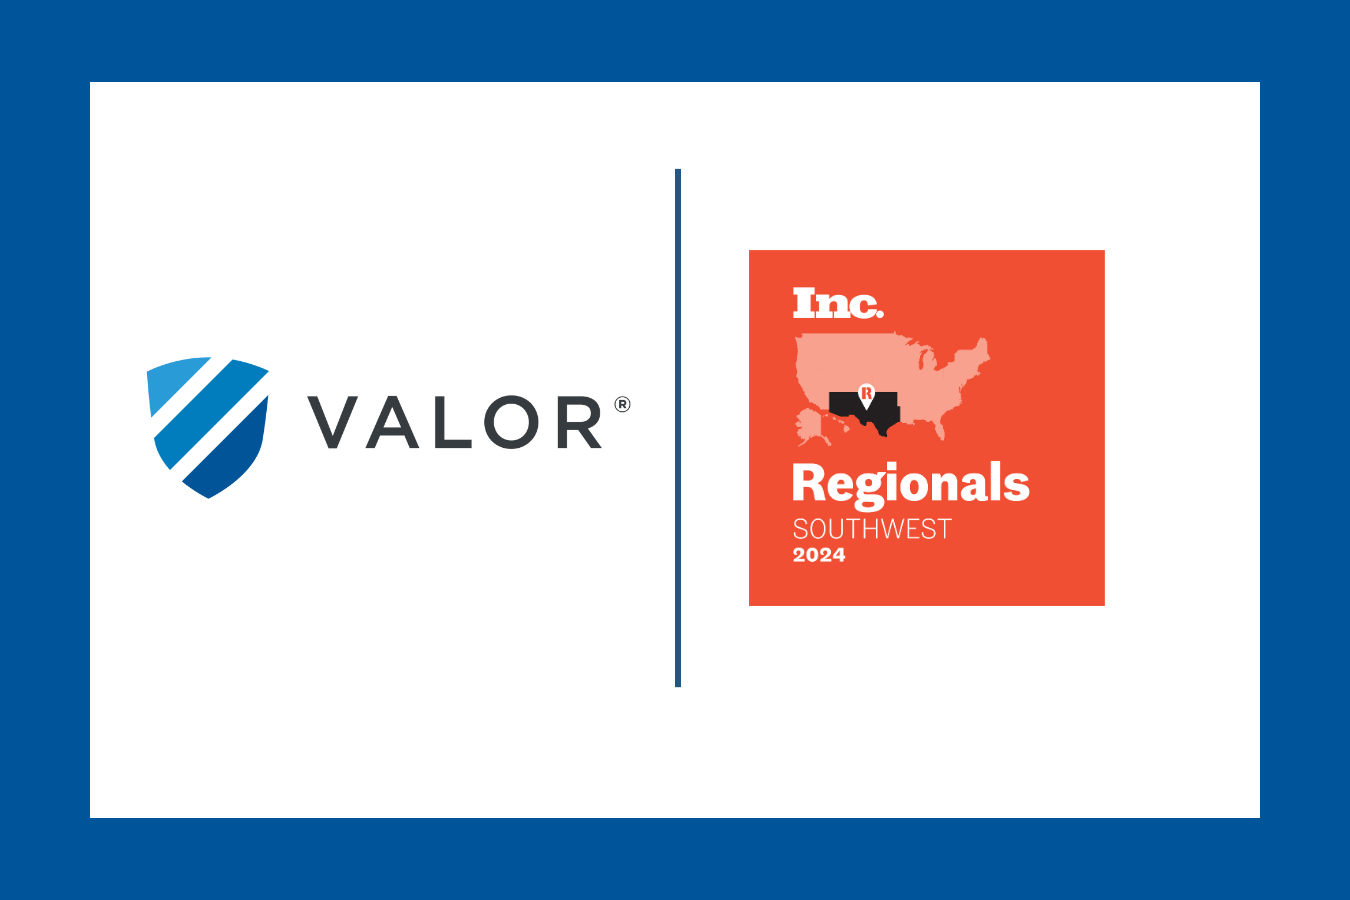 Valor Ranks No. 49 on 2024 Inc. Regionals SW